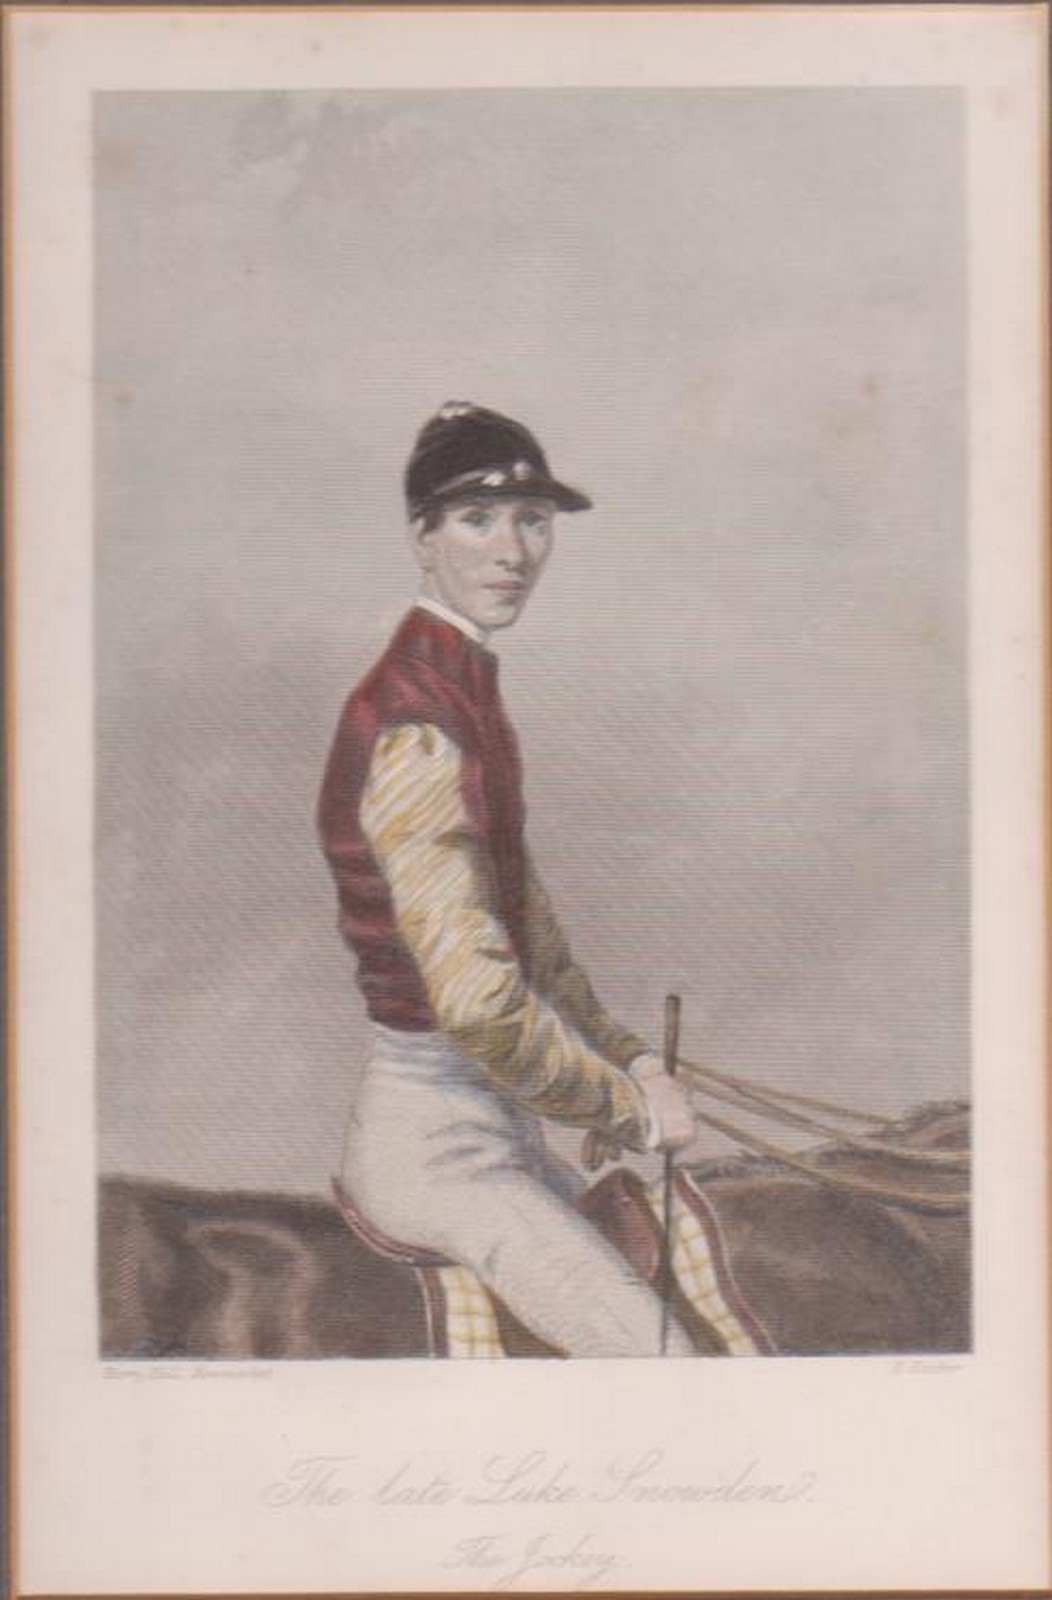 Horse Racing Jockey – Antique print, Luke Snowden – Harry Hall, Newmarket